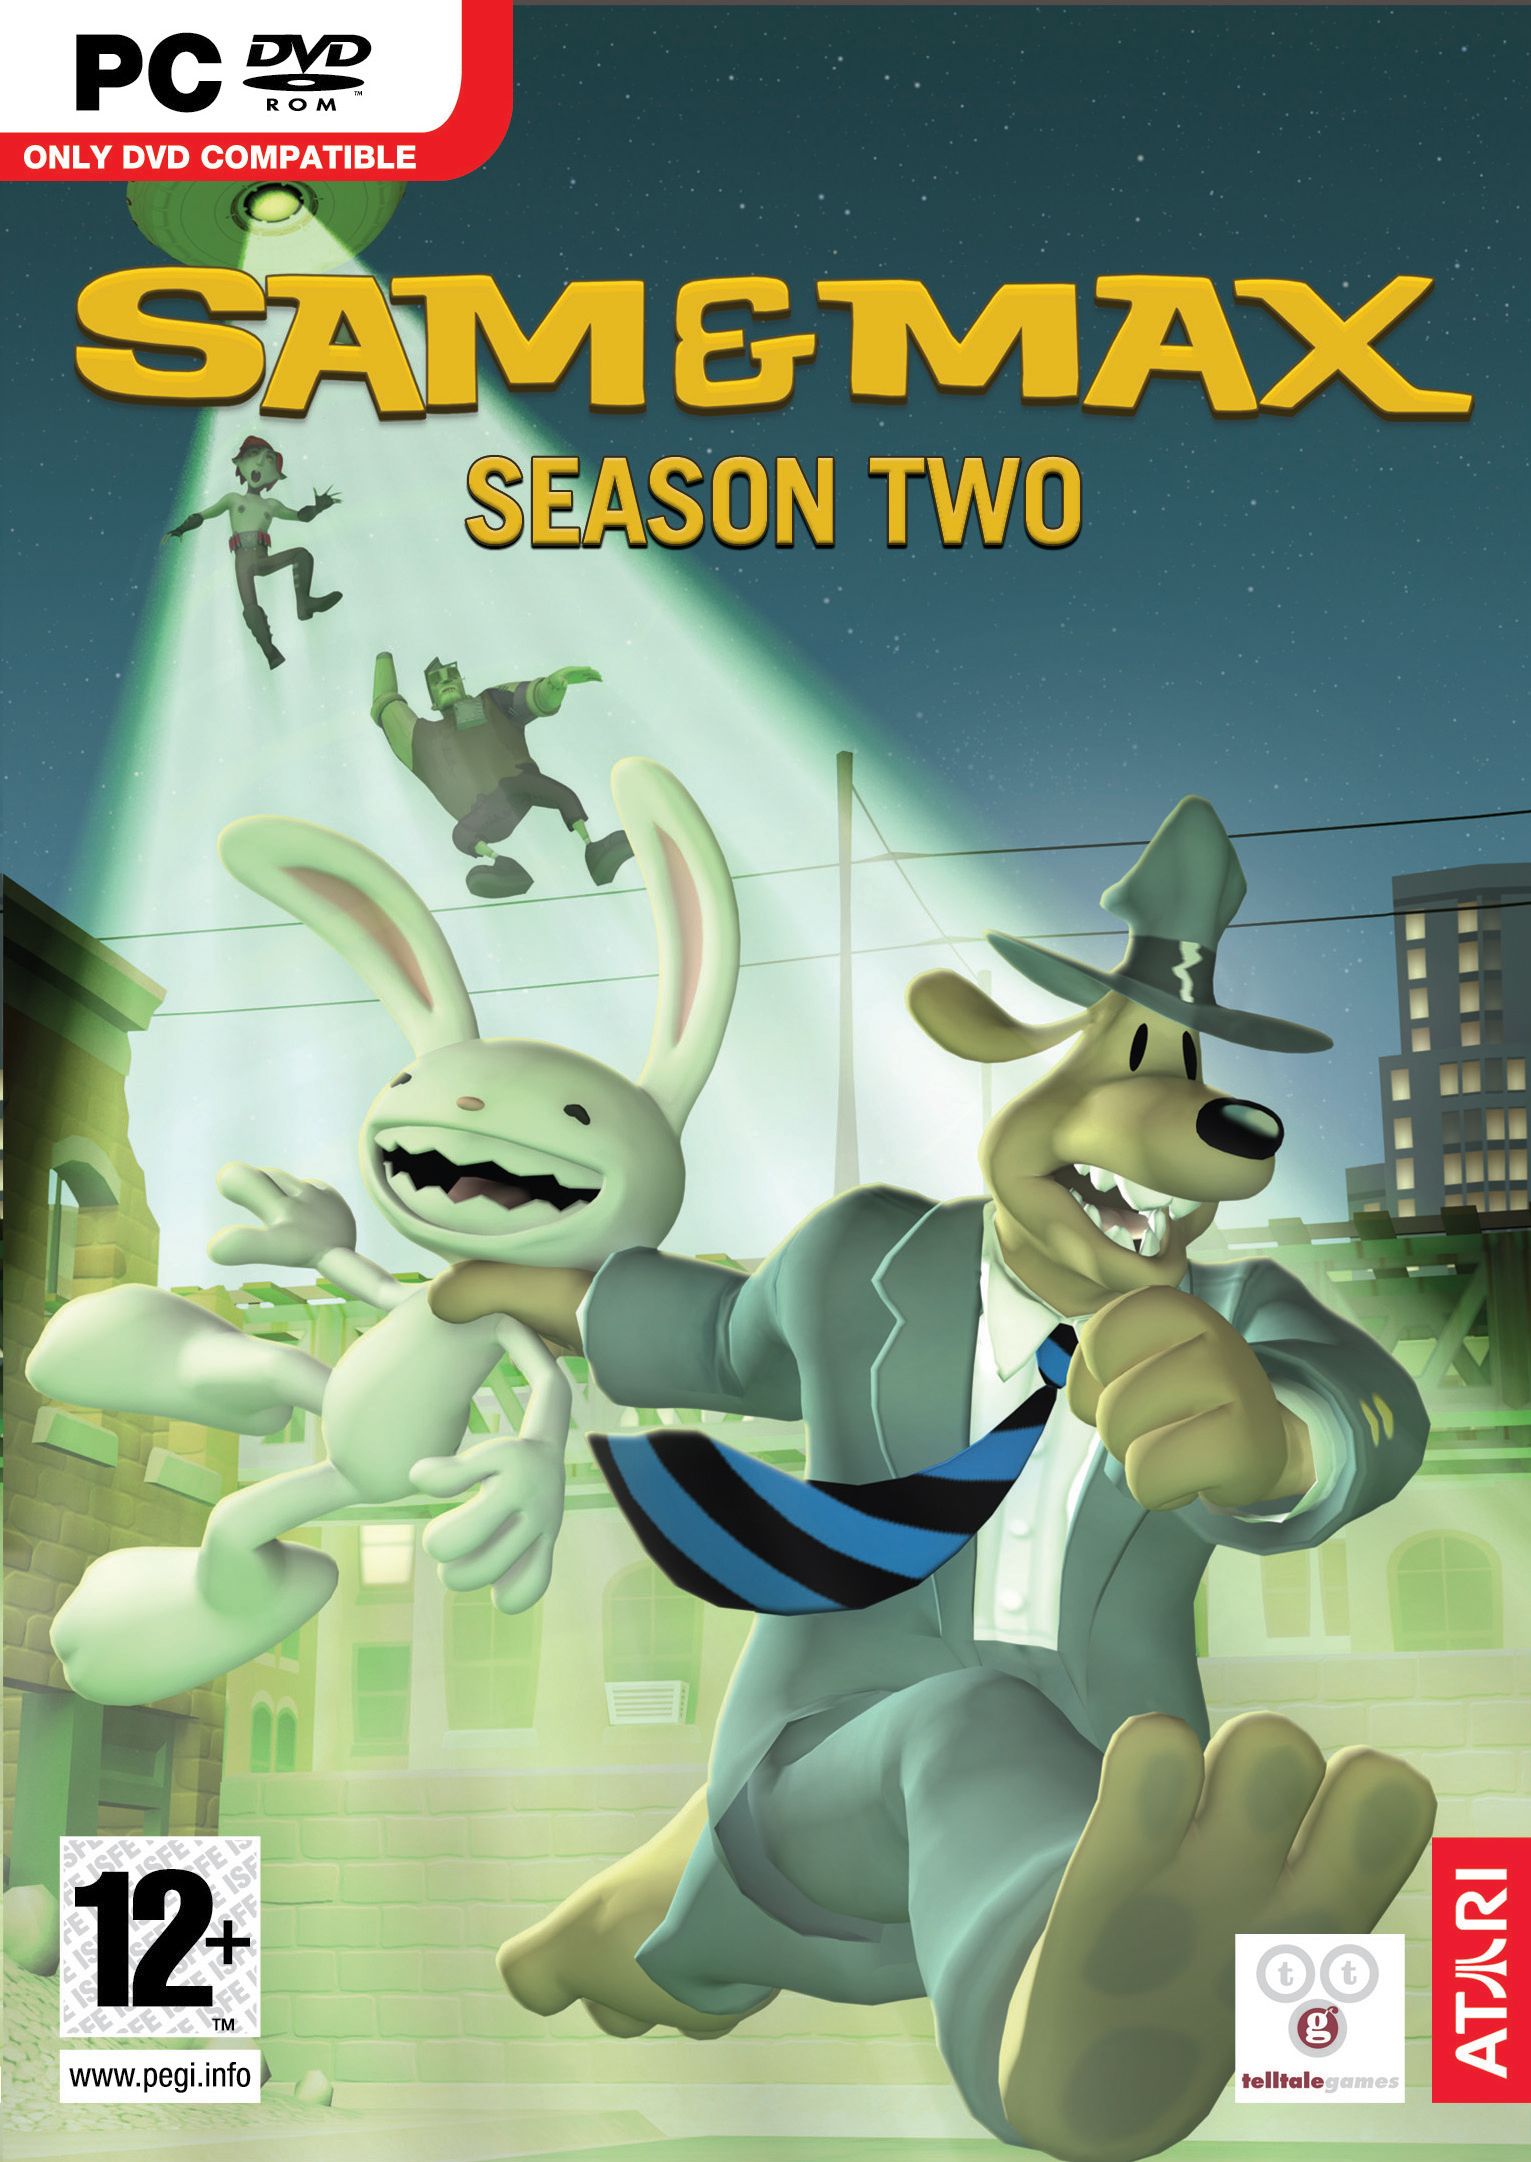 Sam & Max Season Two: Beyond Time & Space